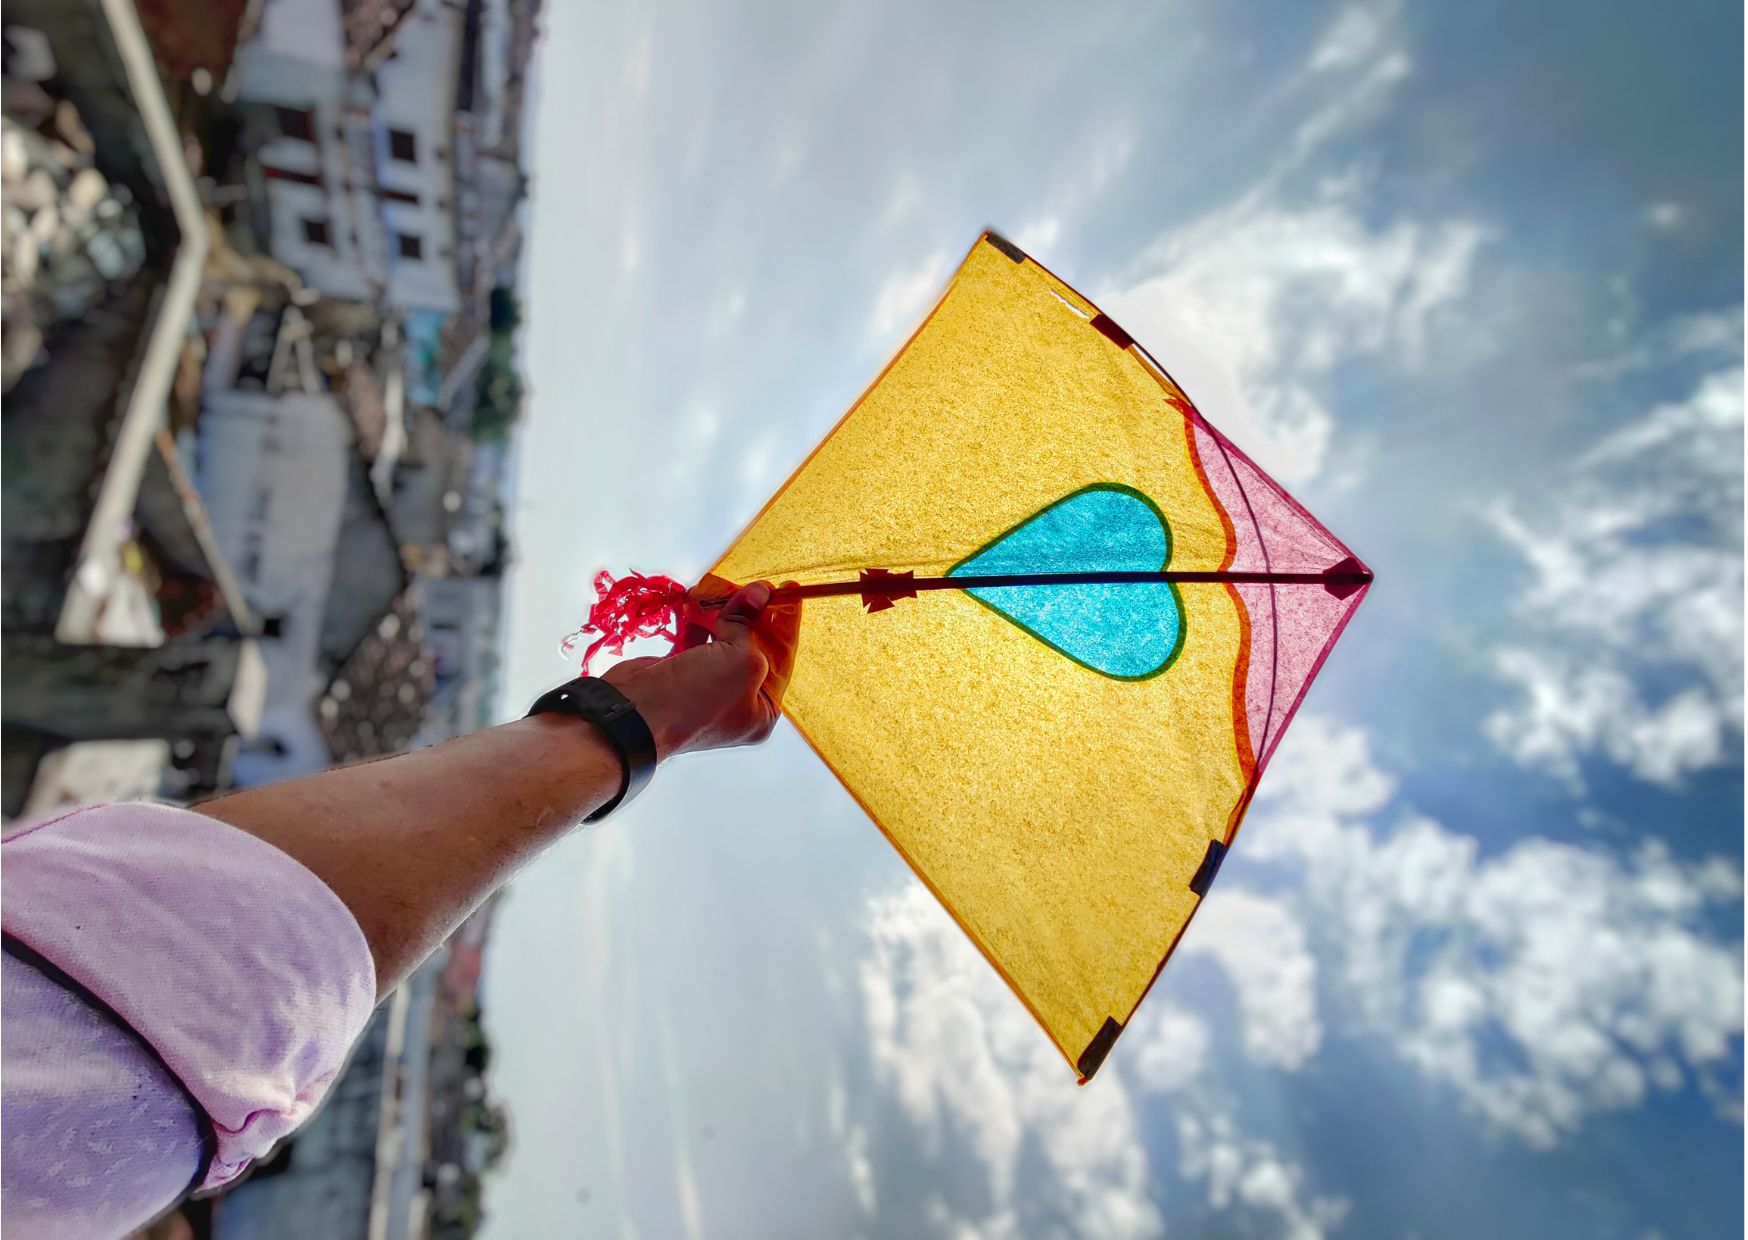 Uttrayan in Gujarat: a hand holding a kite 